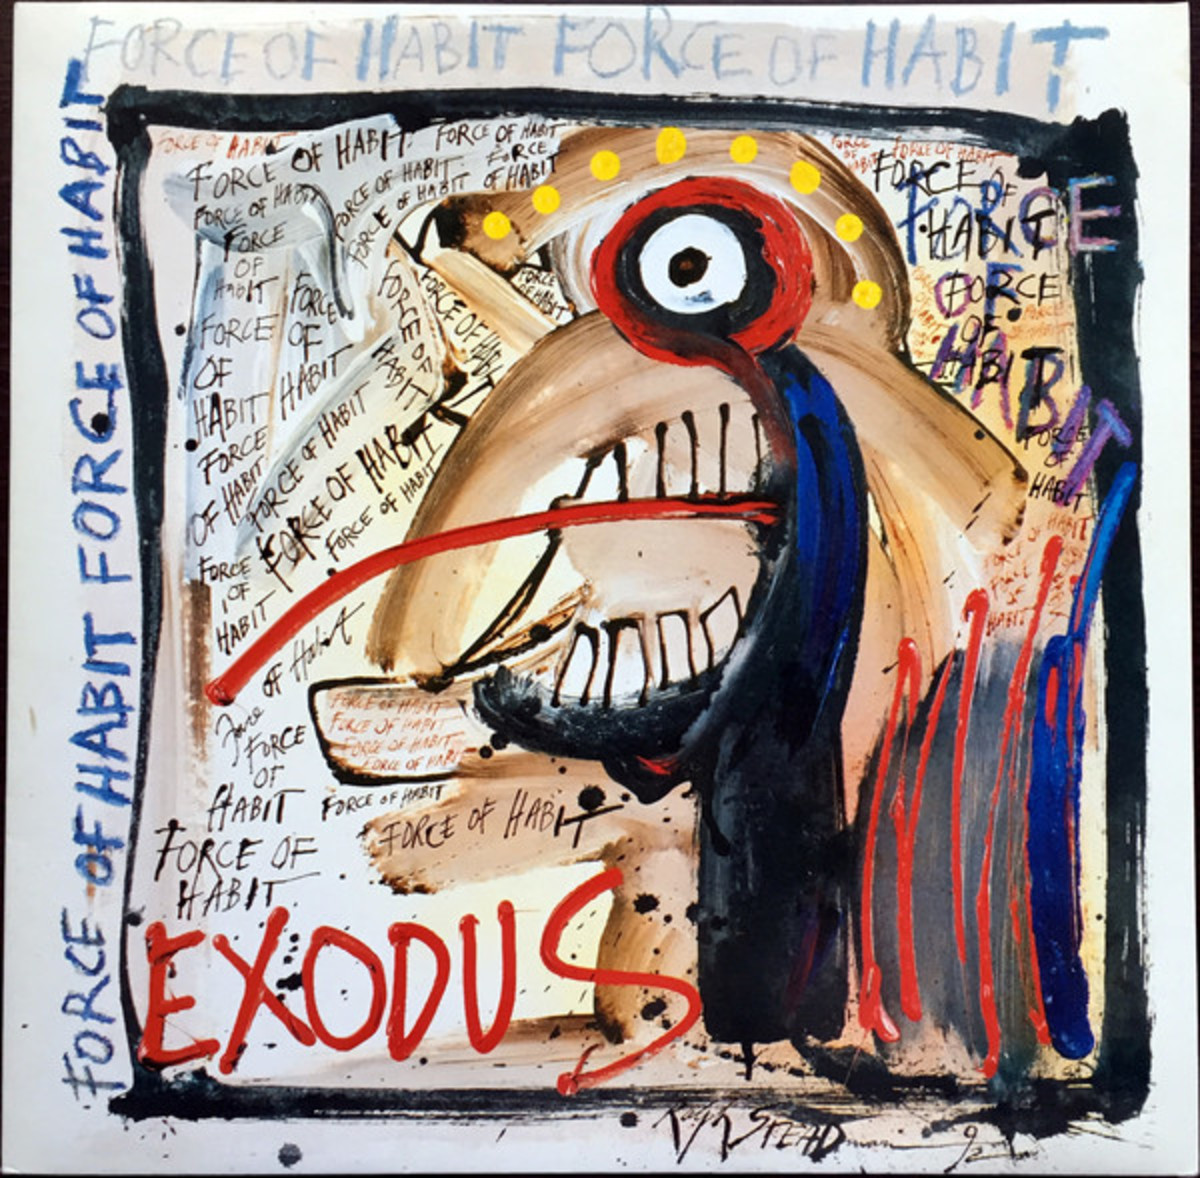 Exodus, "Force of Habit" (1992)